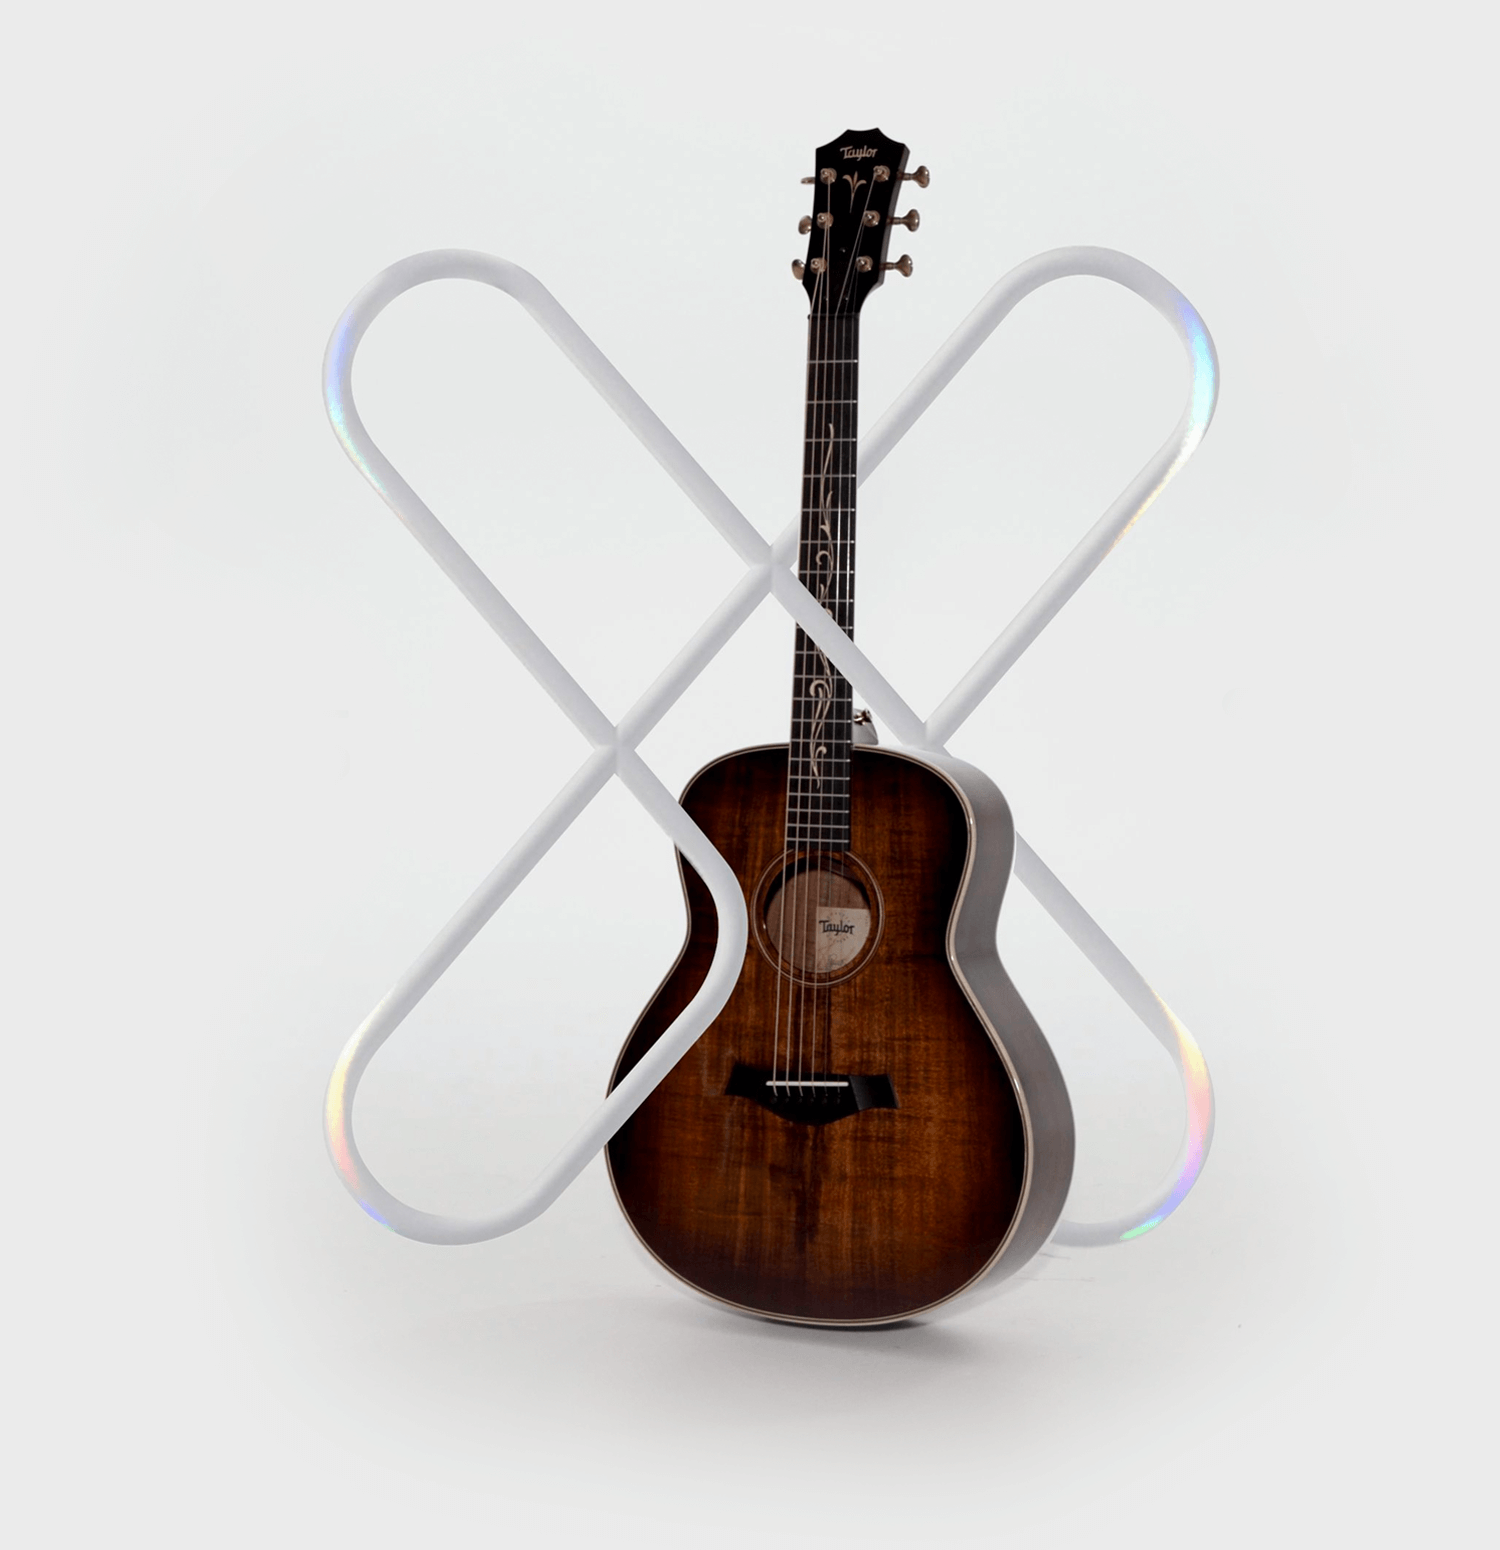 D'Addario XS logo with a Taylor guitar